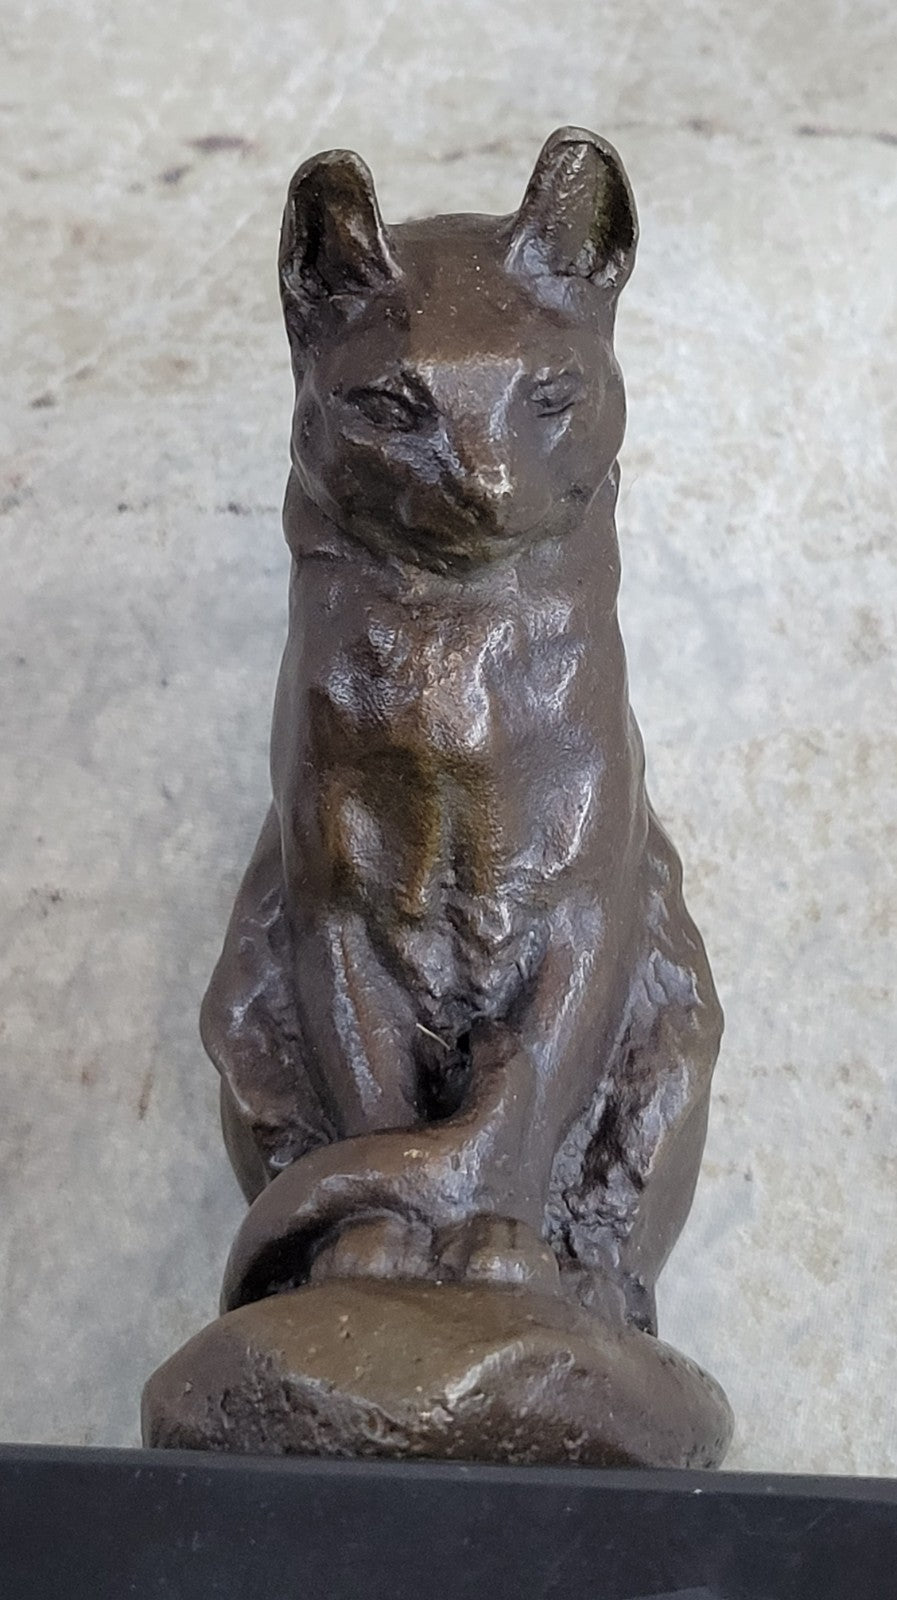 Handcrafted bronze sculpture SALE Decor Home Cast Hot Cat House Original Signed